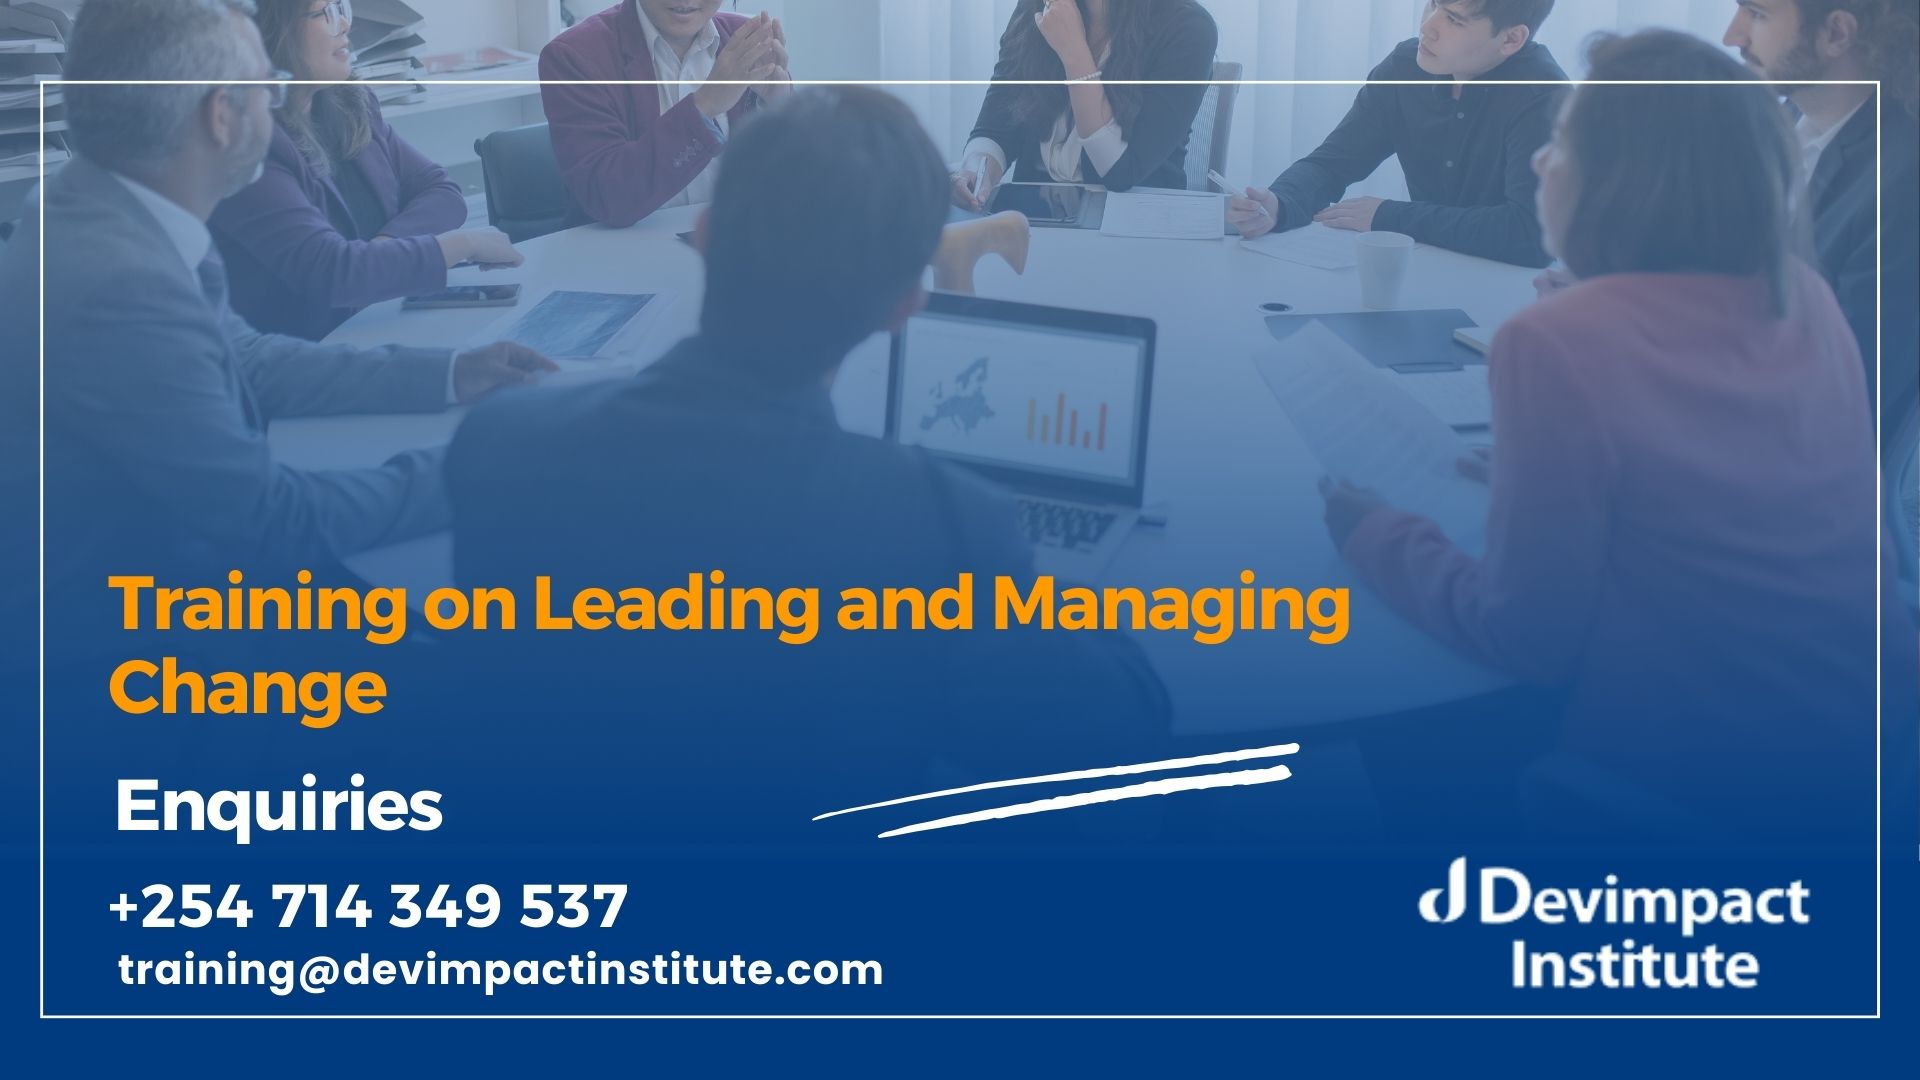 Training on Leading and Managing Change, Devimpact Institute, Nairobi, Kenya